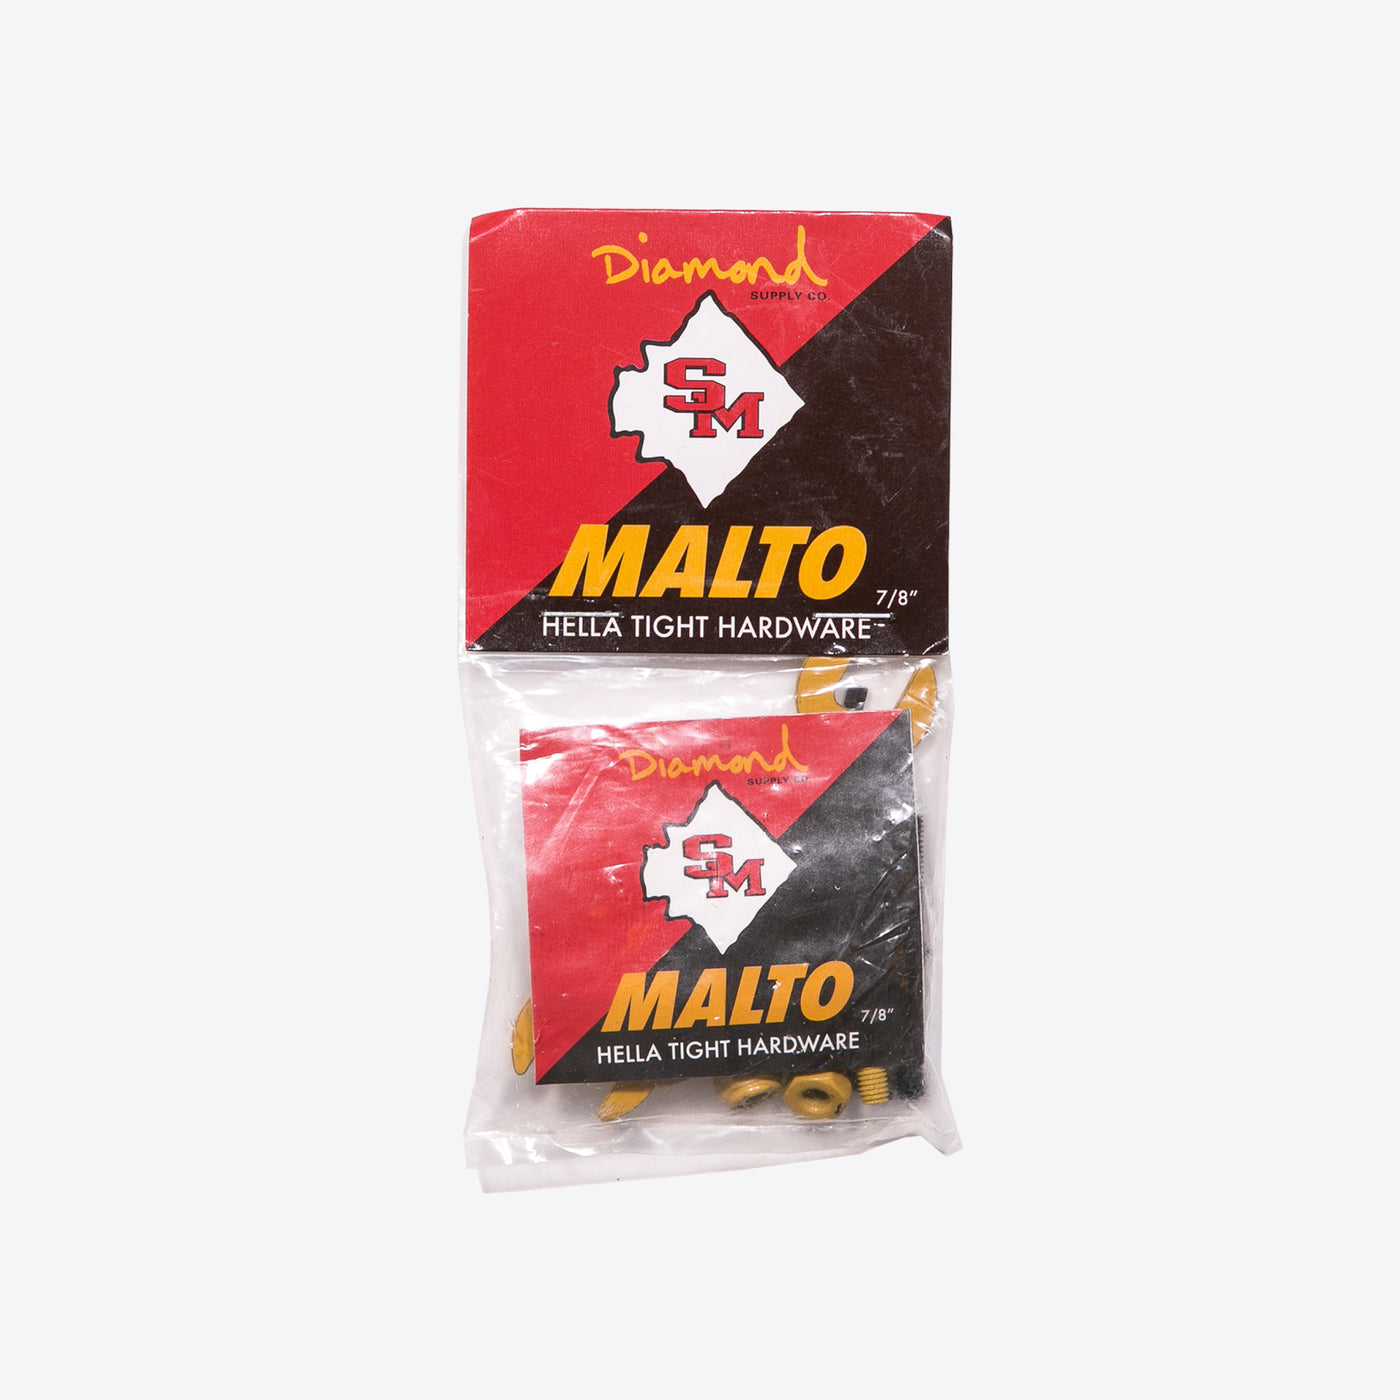 Sean Malto Pro Hardware - 7/8" Yellow